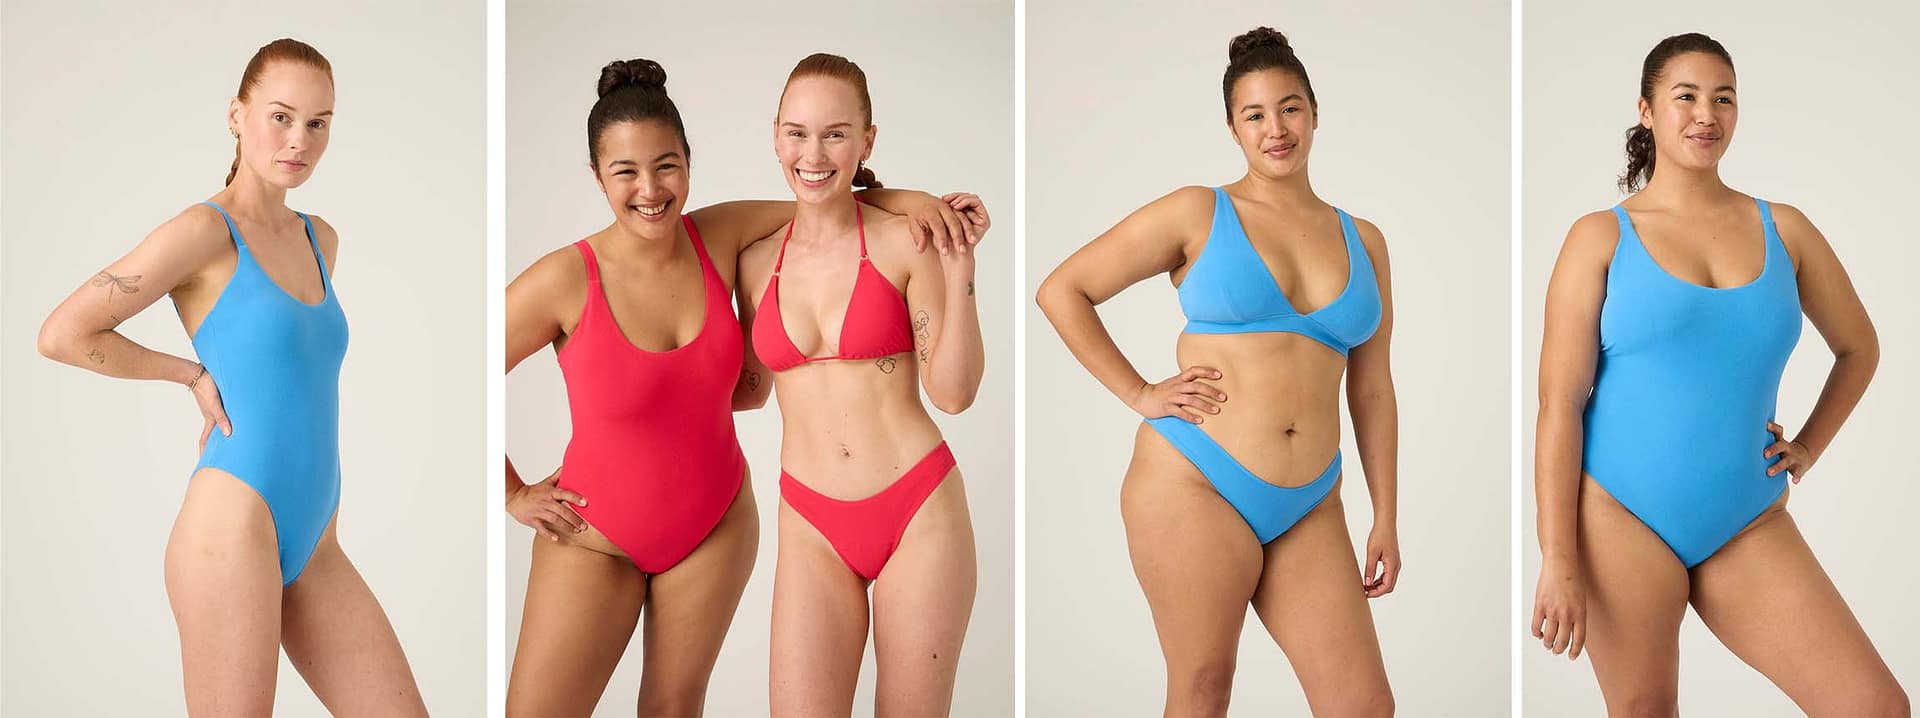 New Leak Proof Swimwear For Winter Getaways From Modibodi